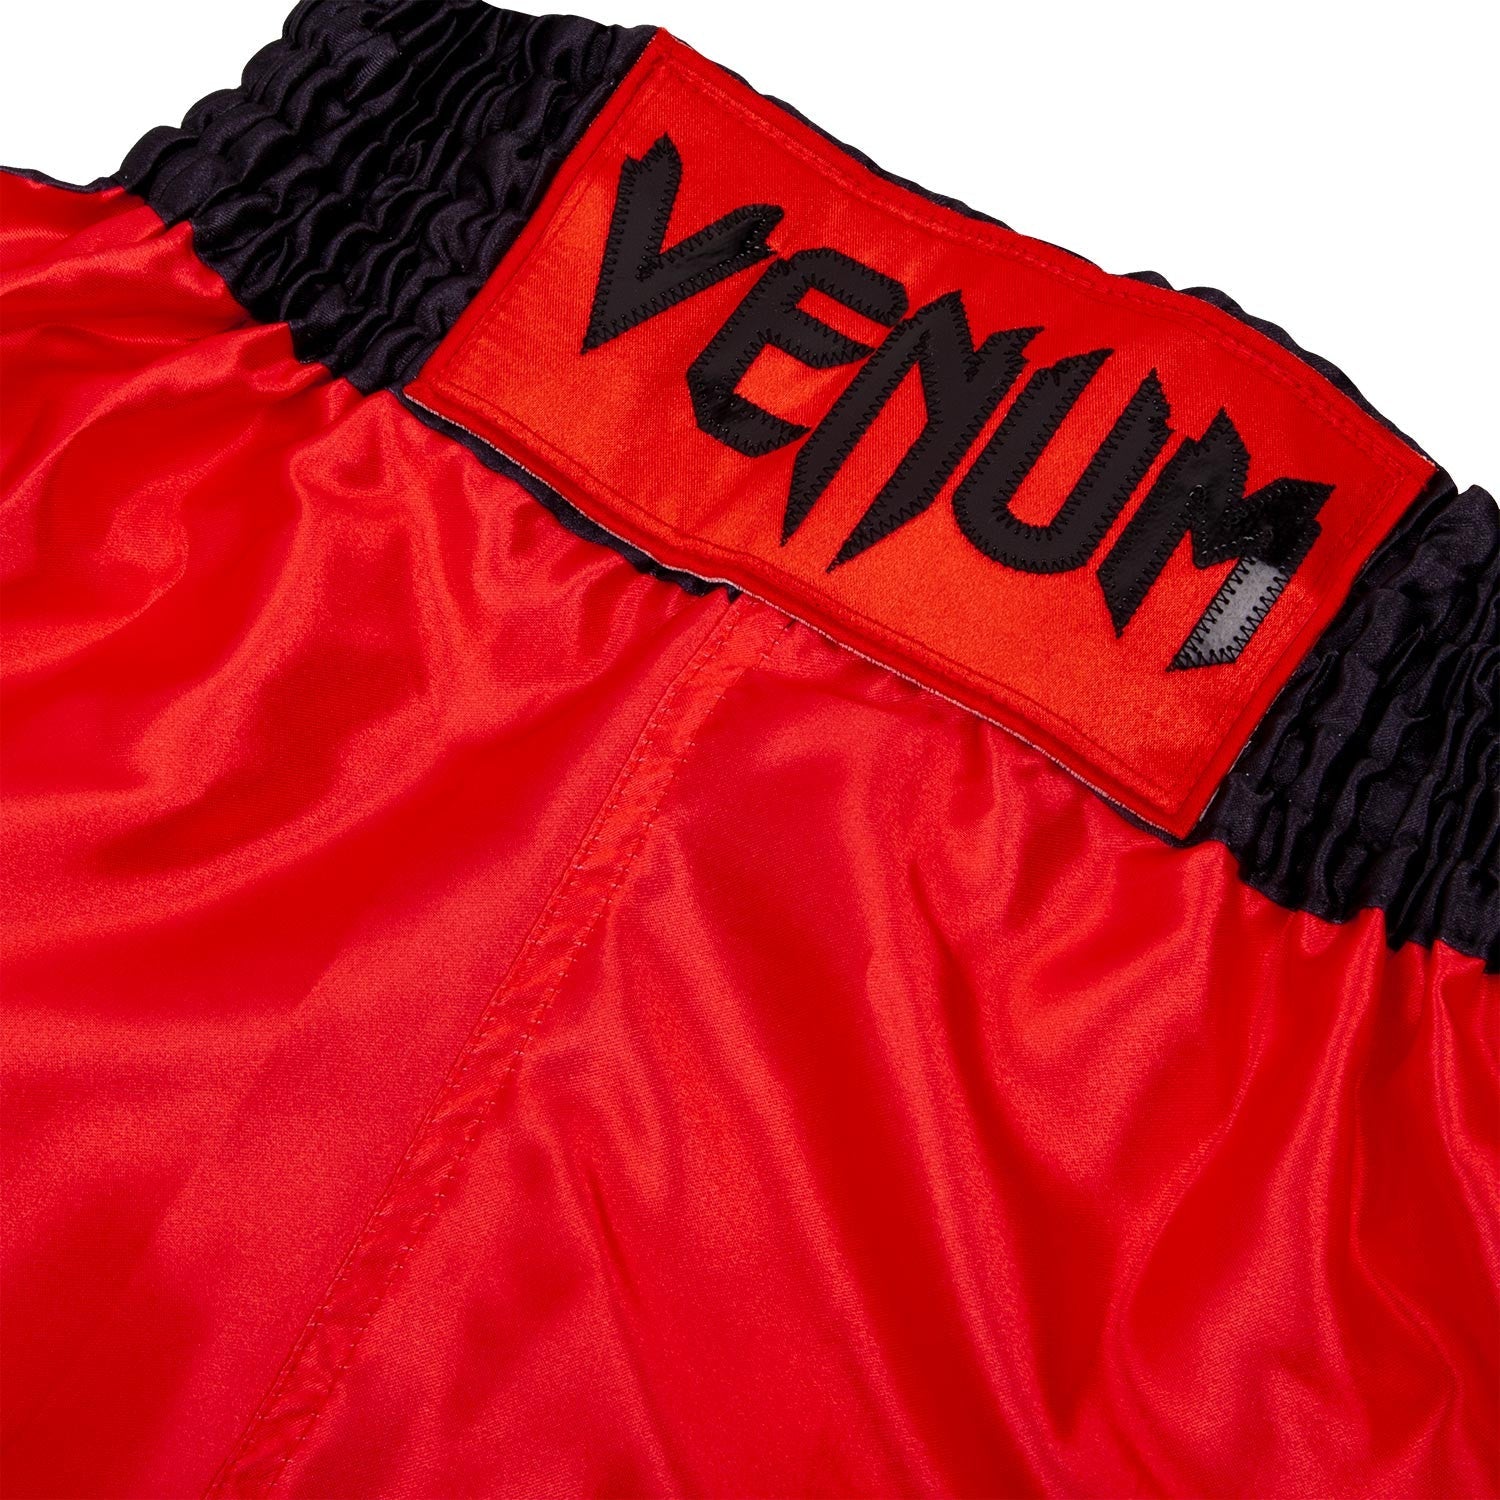 Pantalones de Boxeo Venum Elite ▷ Ropa deportiva